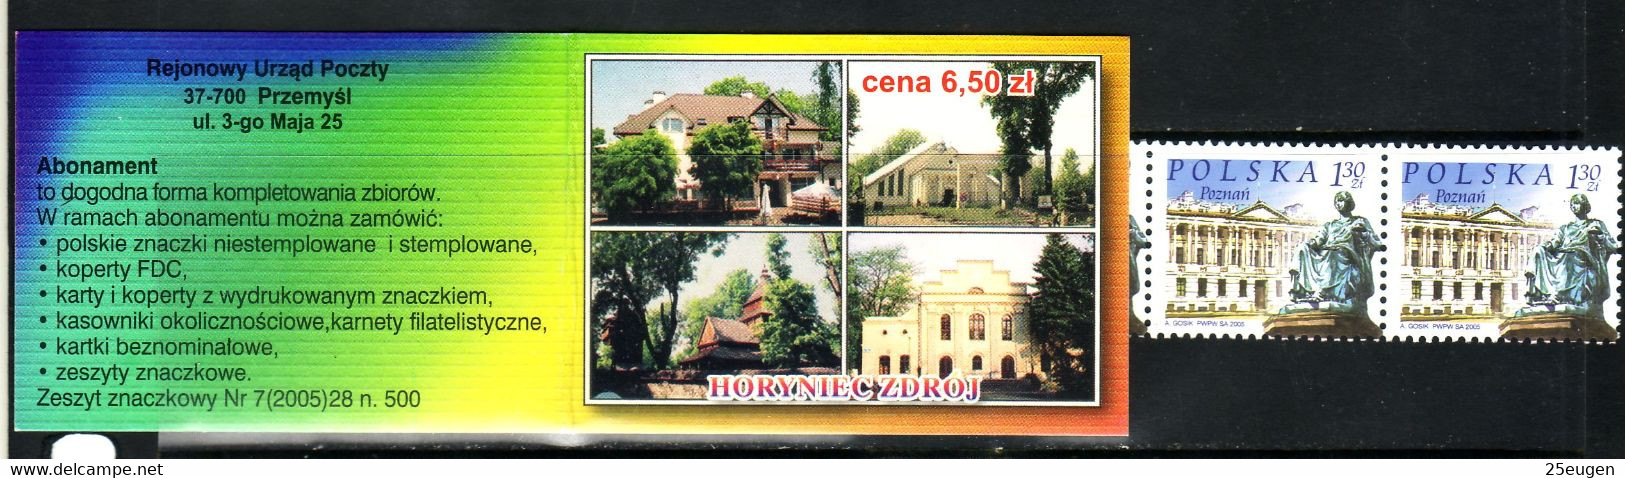 POLAND 2005  HORYNIEC ZDRÓJ MICHEL NO 4166 X 5 Booklet MNH - Carnets